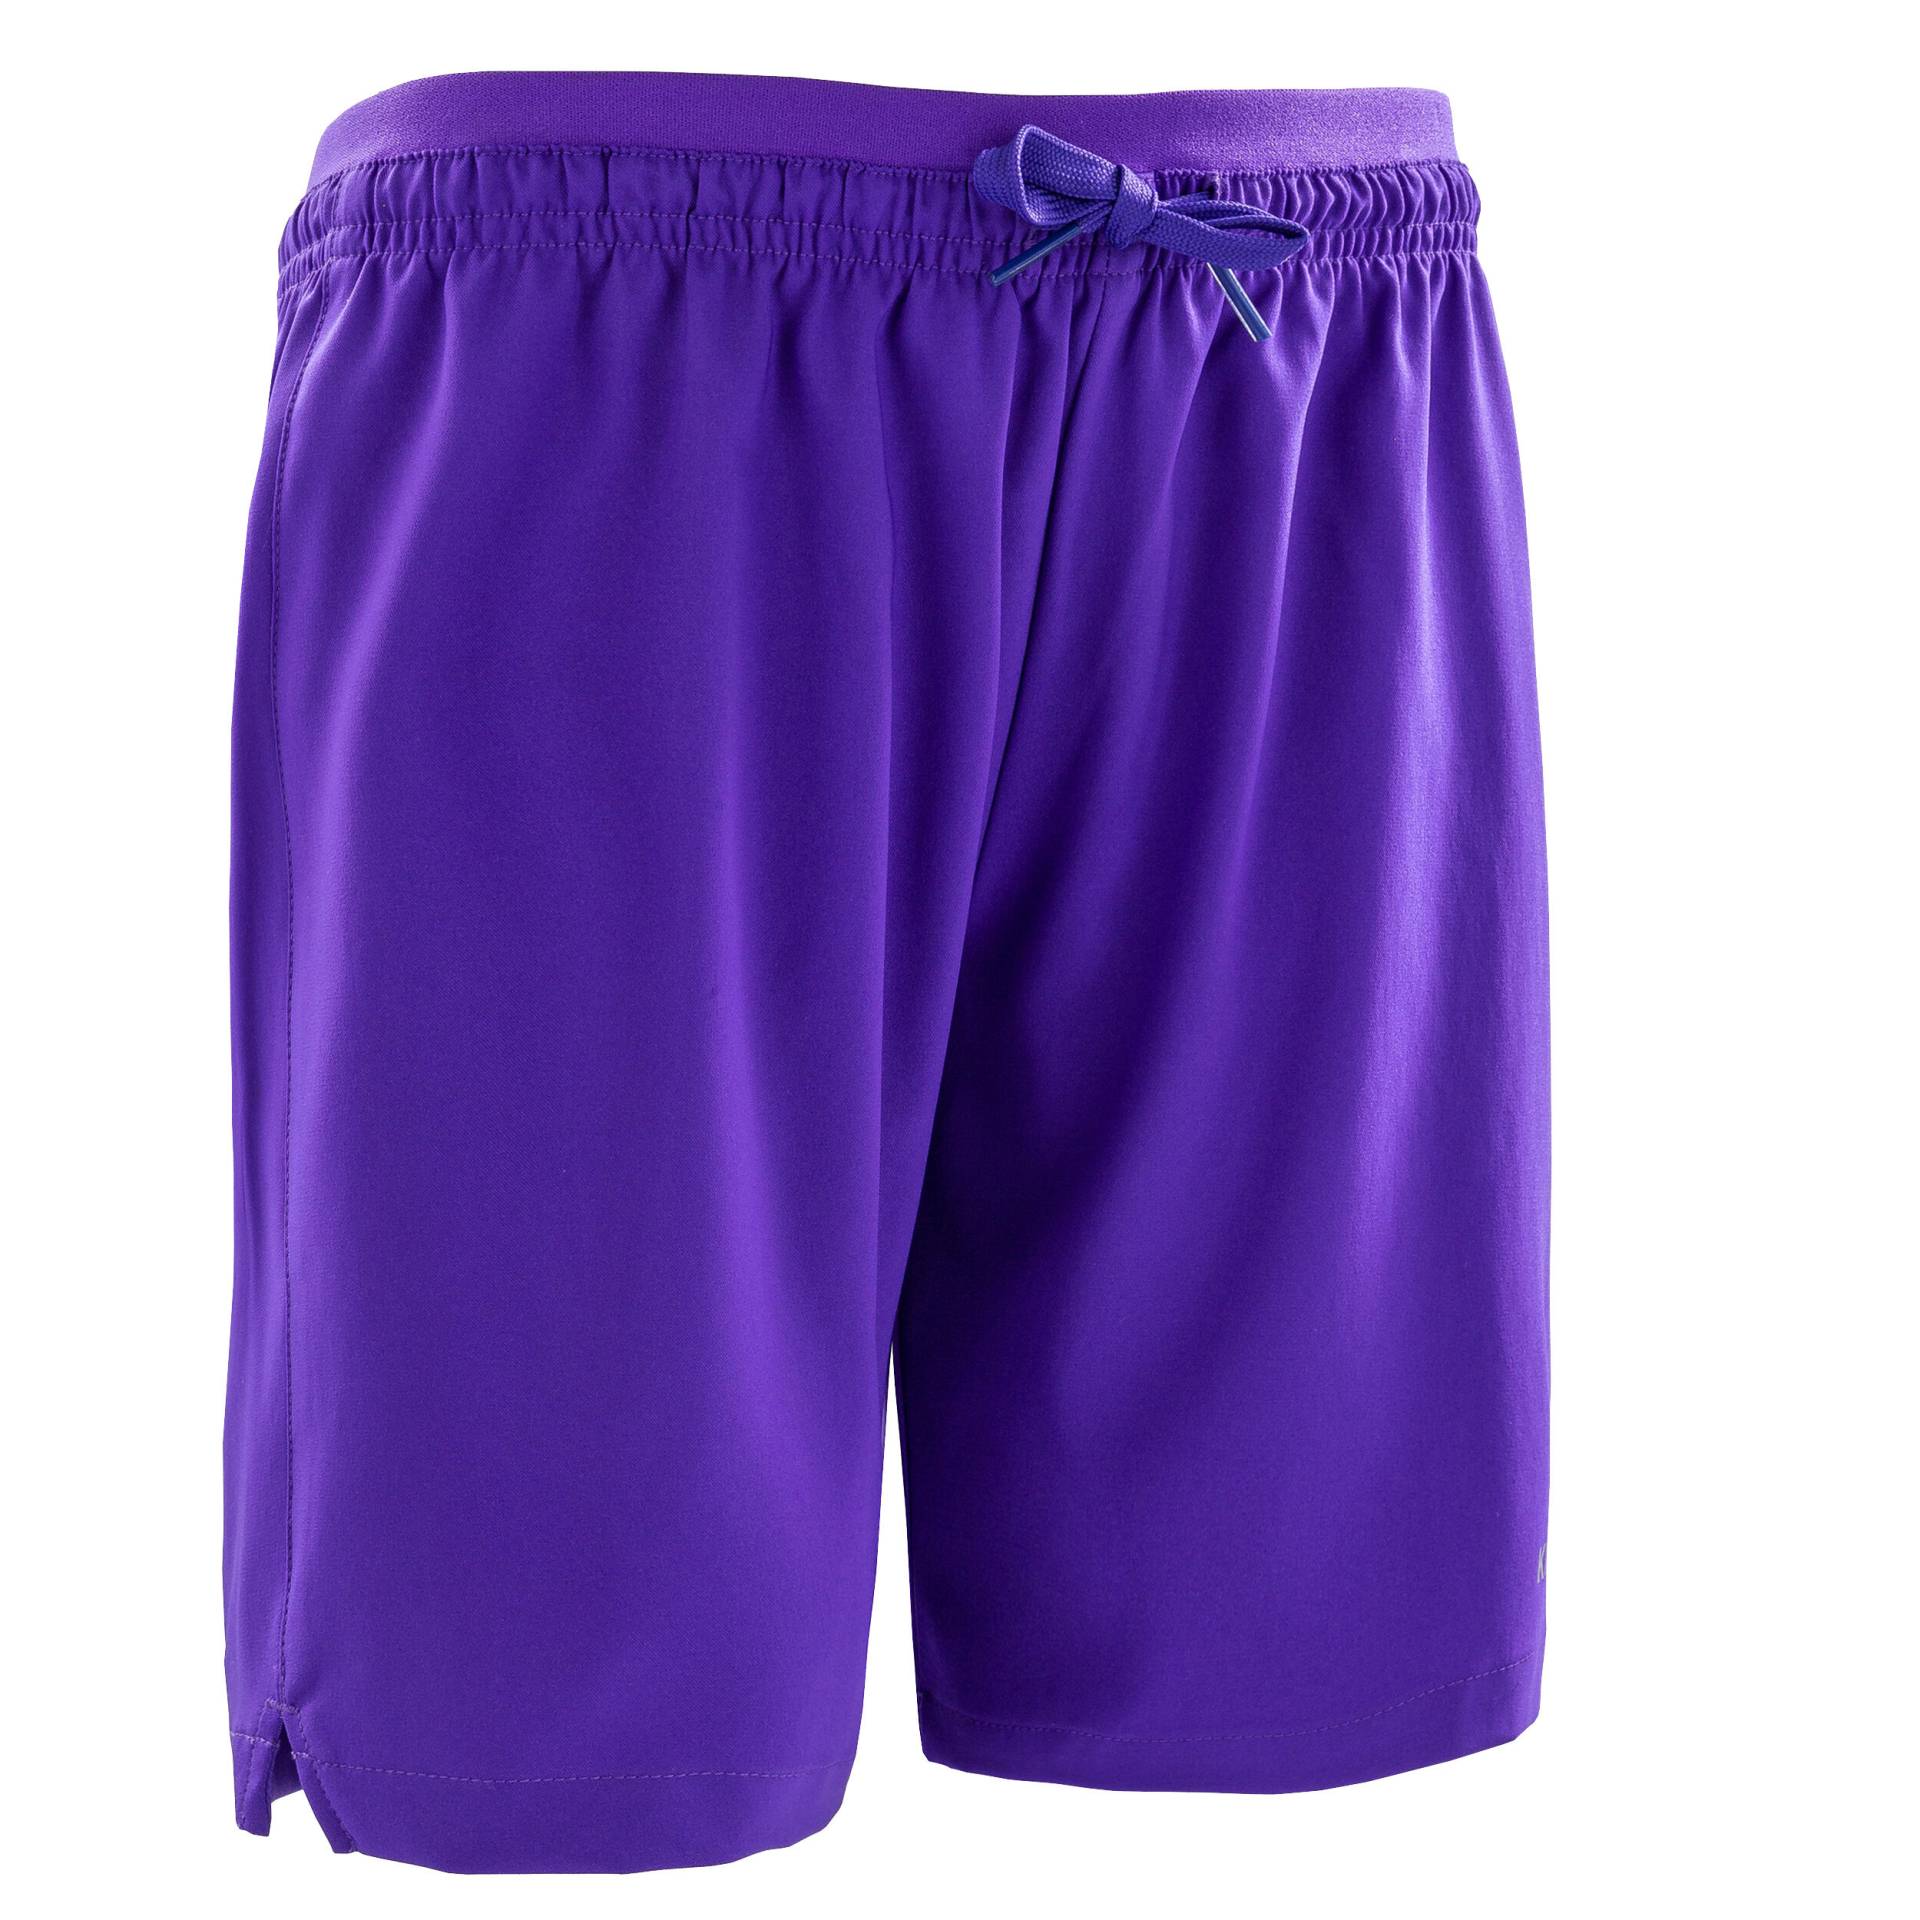 Mädchen Fussball Shorts - Viralto violett von KIPSTA